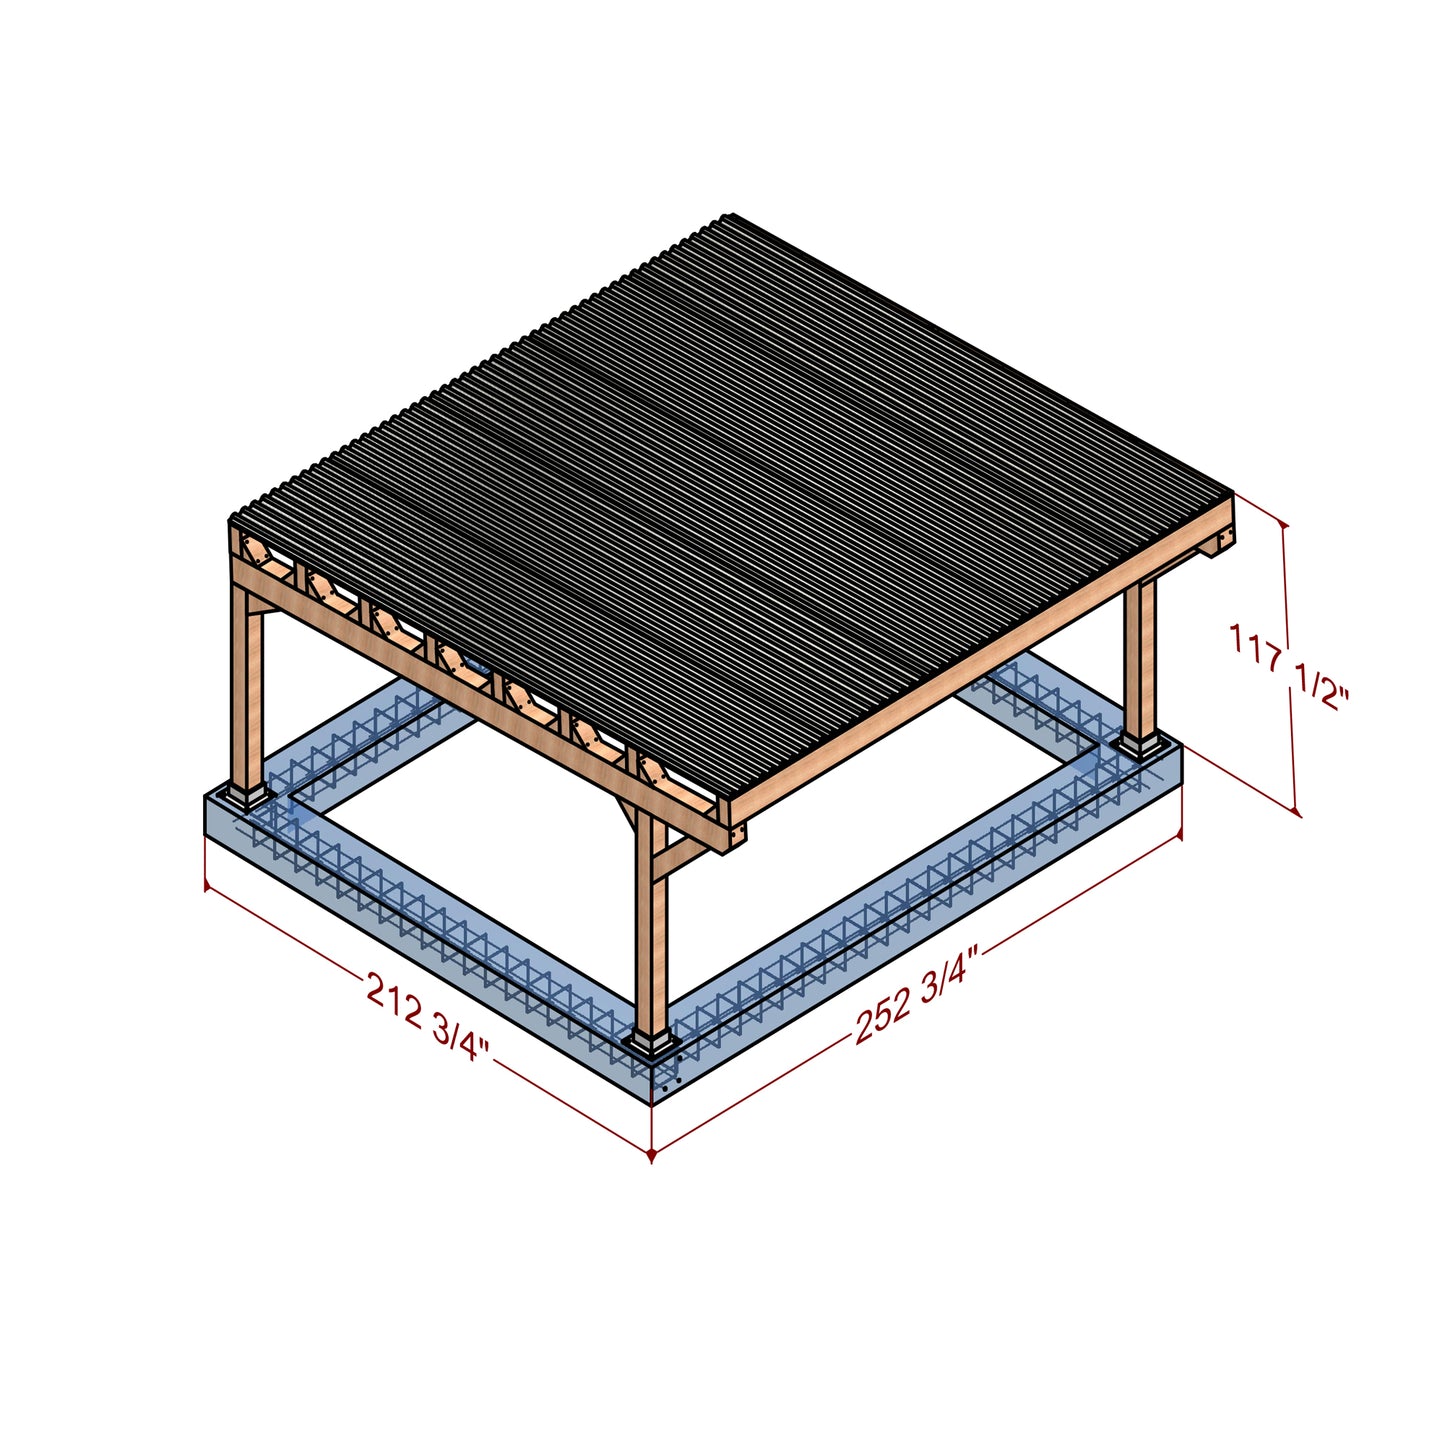 17'x20' Carport Plans DIY Wooden car garage - Download Printable PDF